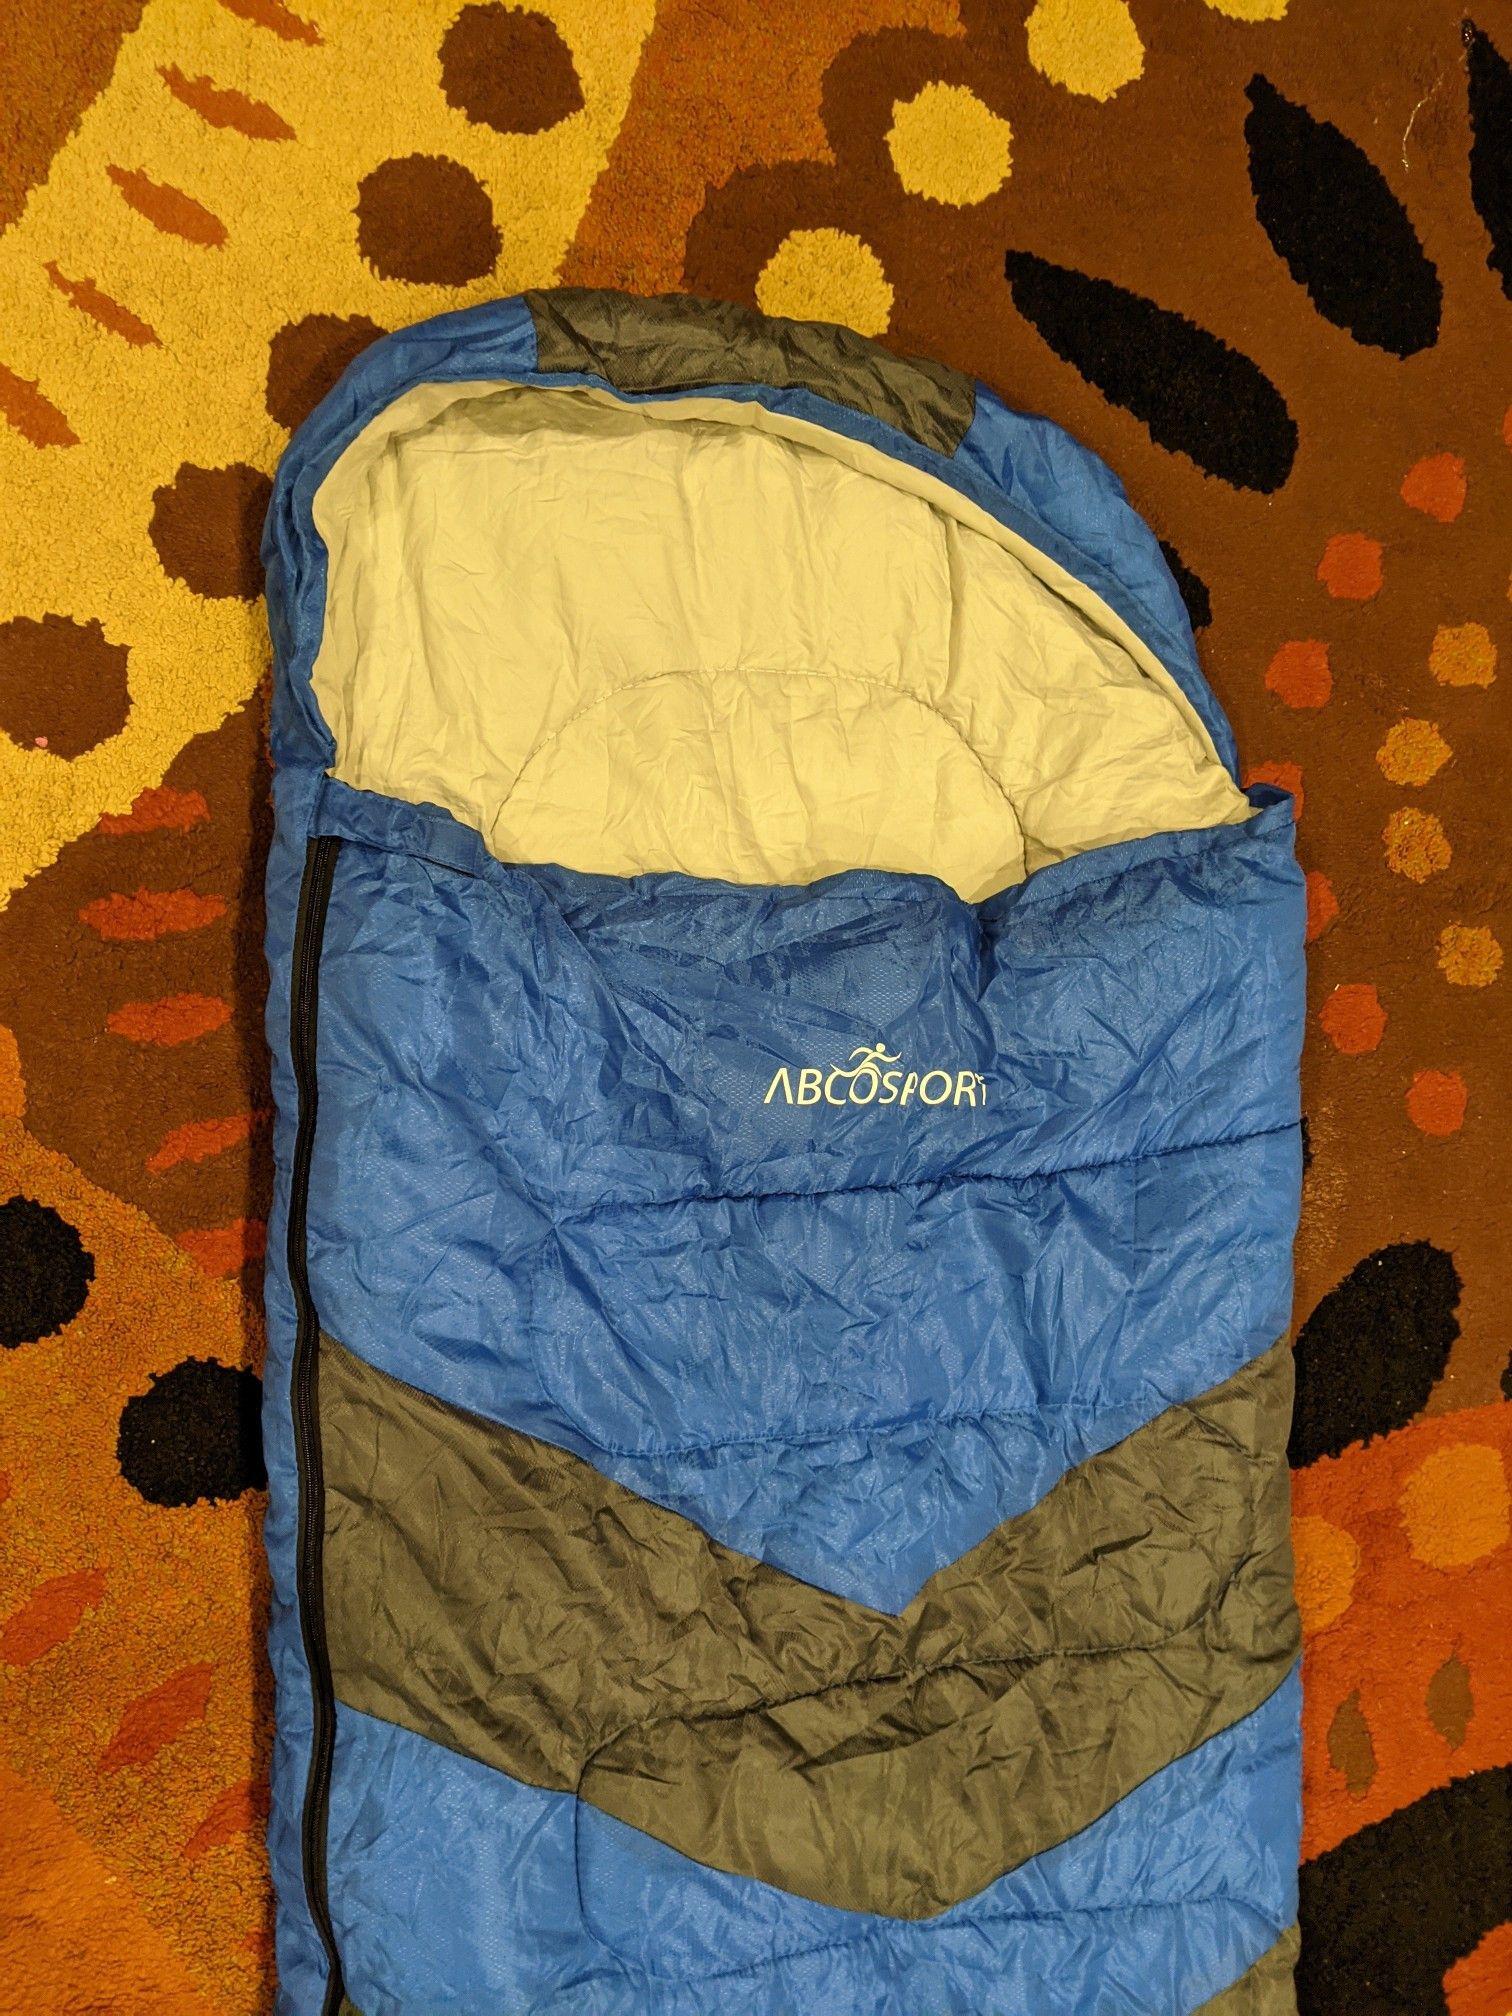 Abcosport Single Sleeping Bag Lightweight Portable, Waterproof - Narrow for Kids